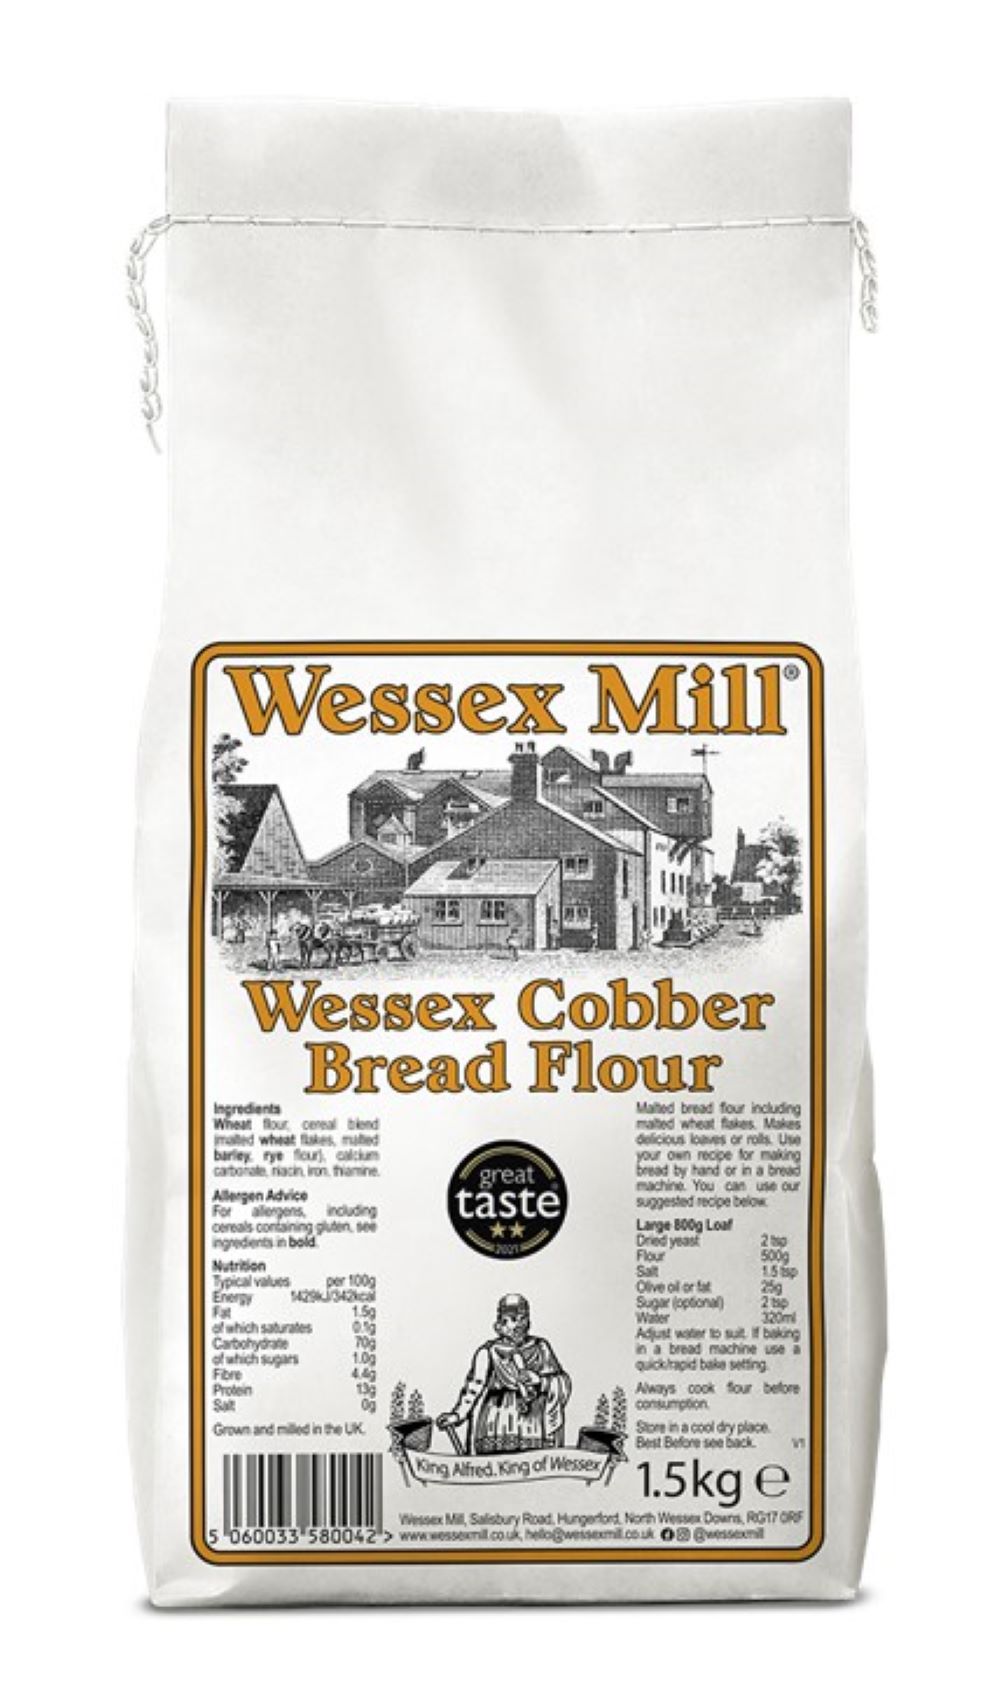 Wessex Cobber Bread Flour